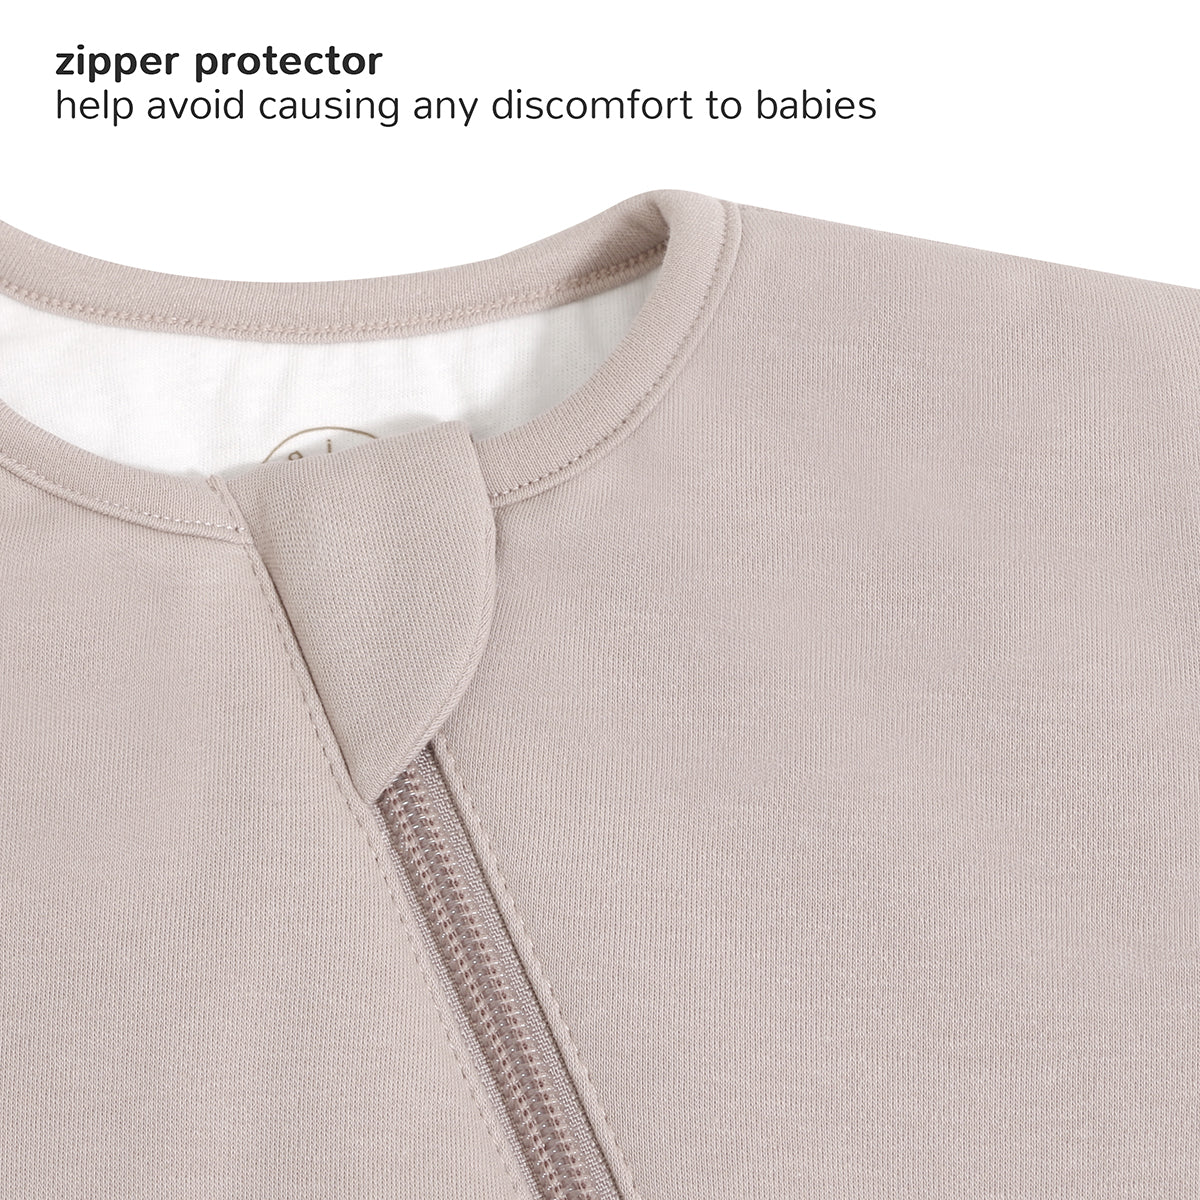 Winter Zip Sleep Sack With Sleeves 3.5 TOG Zipper Protector - Smoky Pink